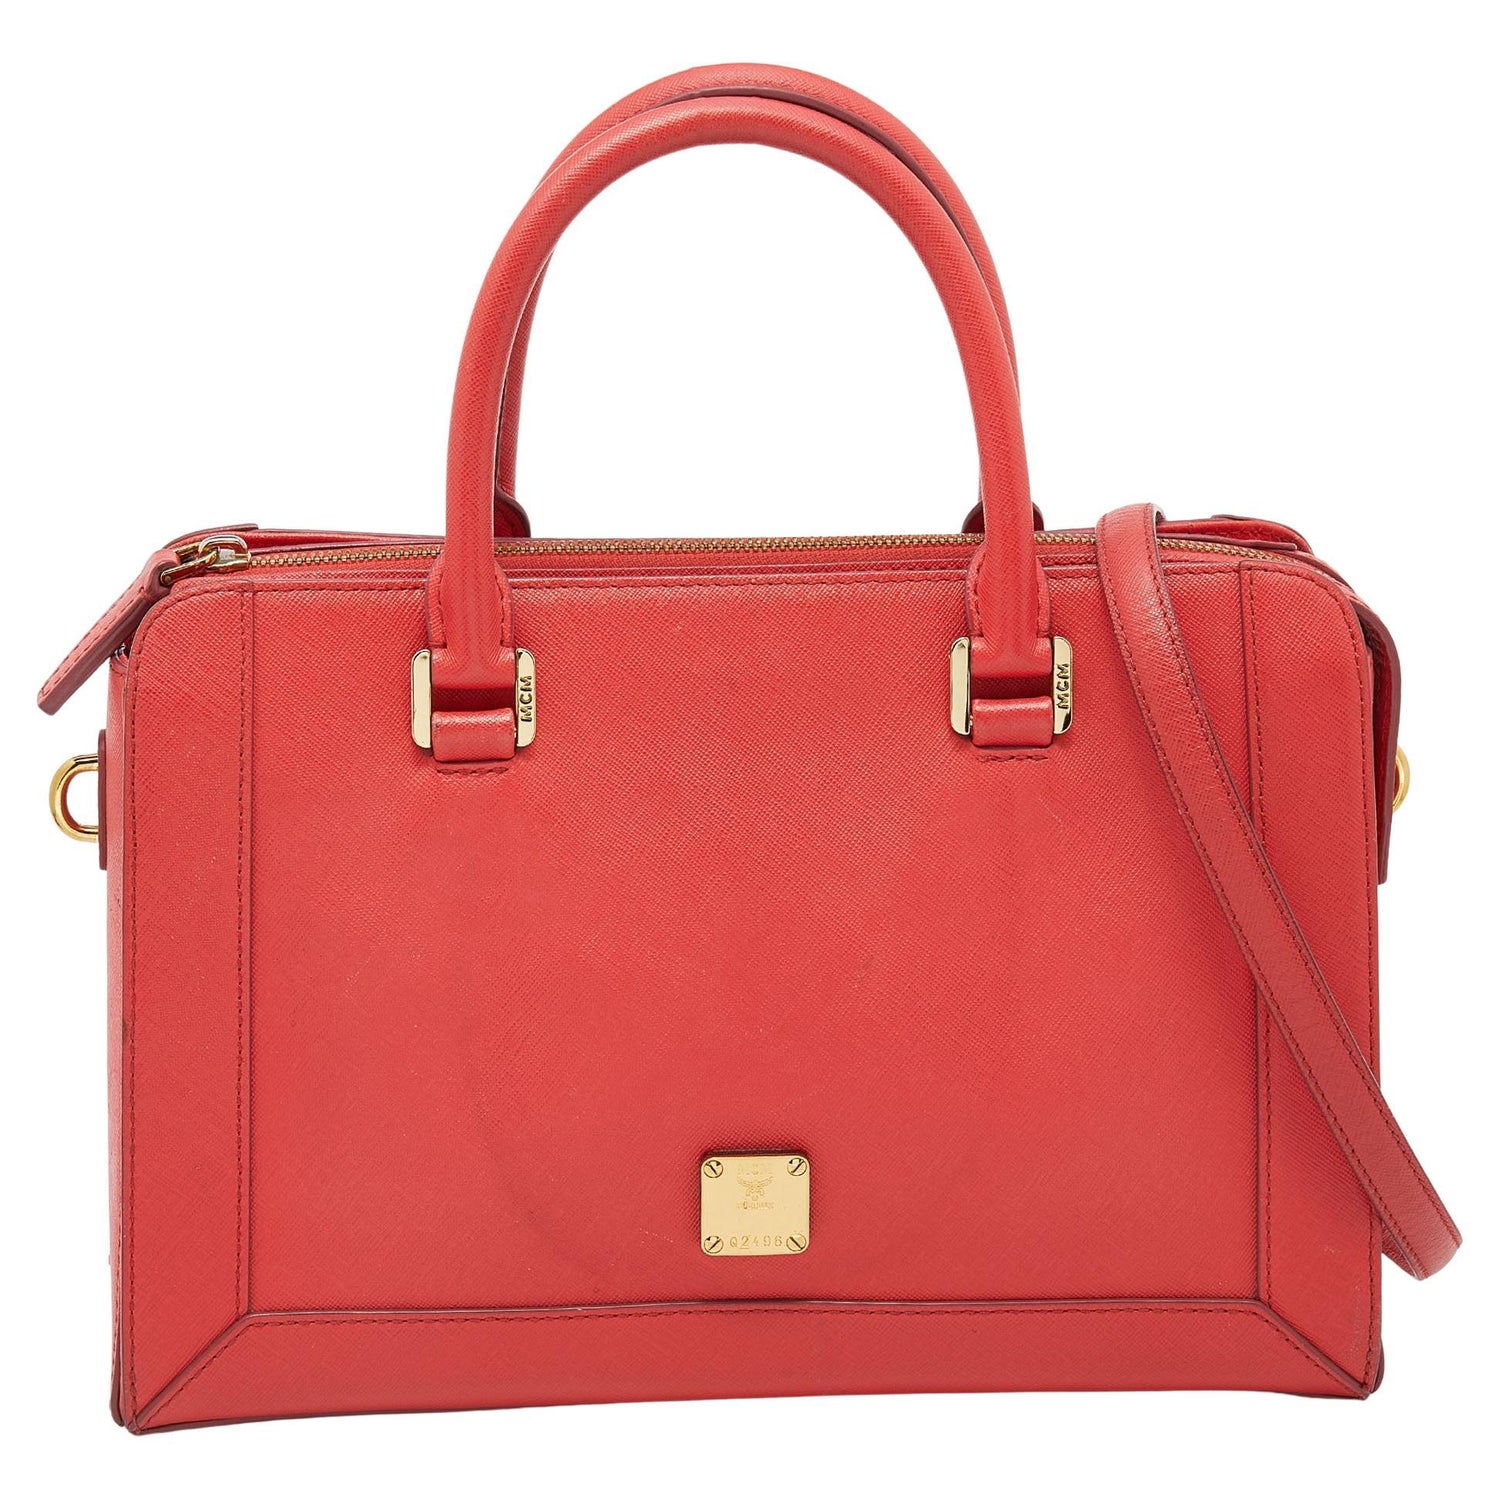 MCM Zip Tote Bags & Handbags for Women for sale